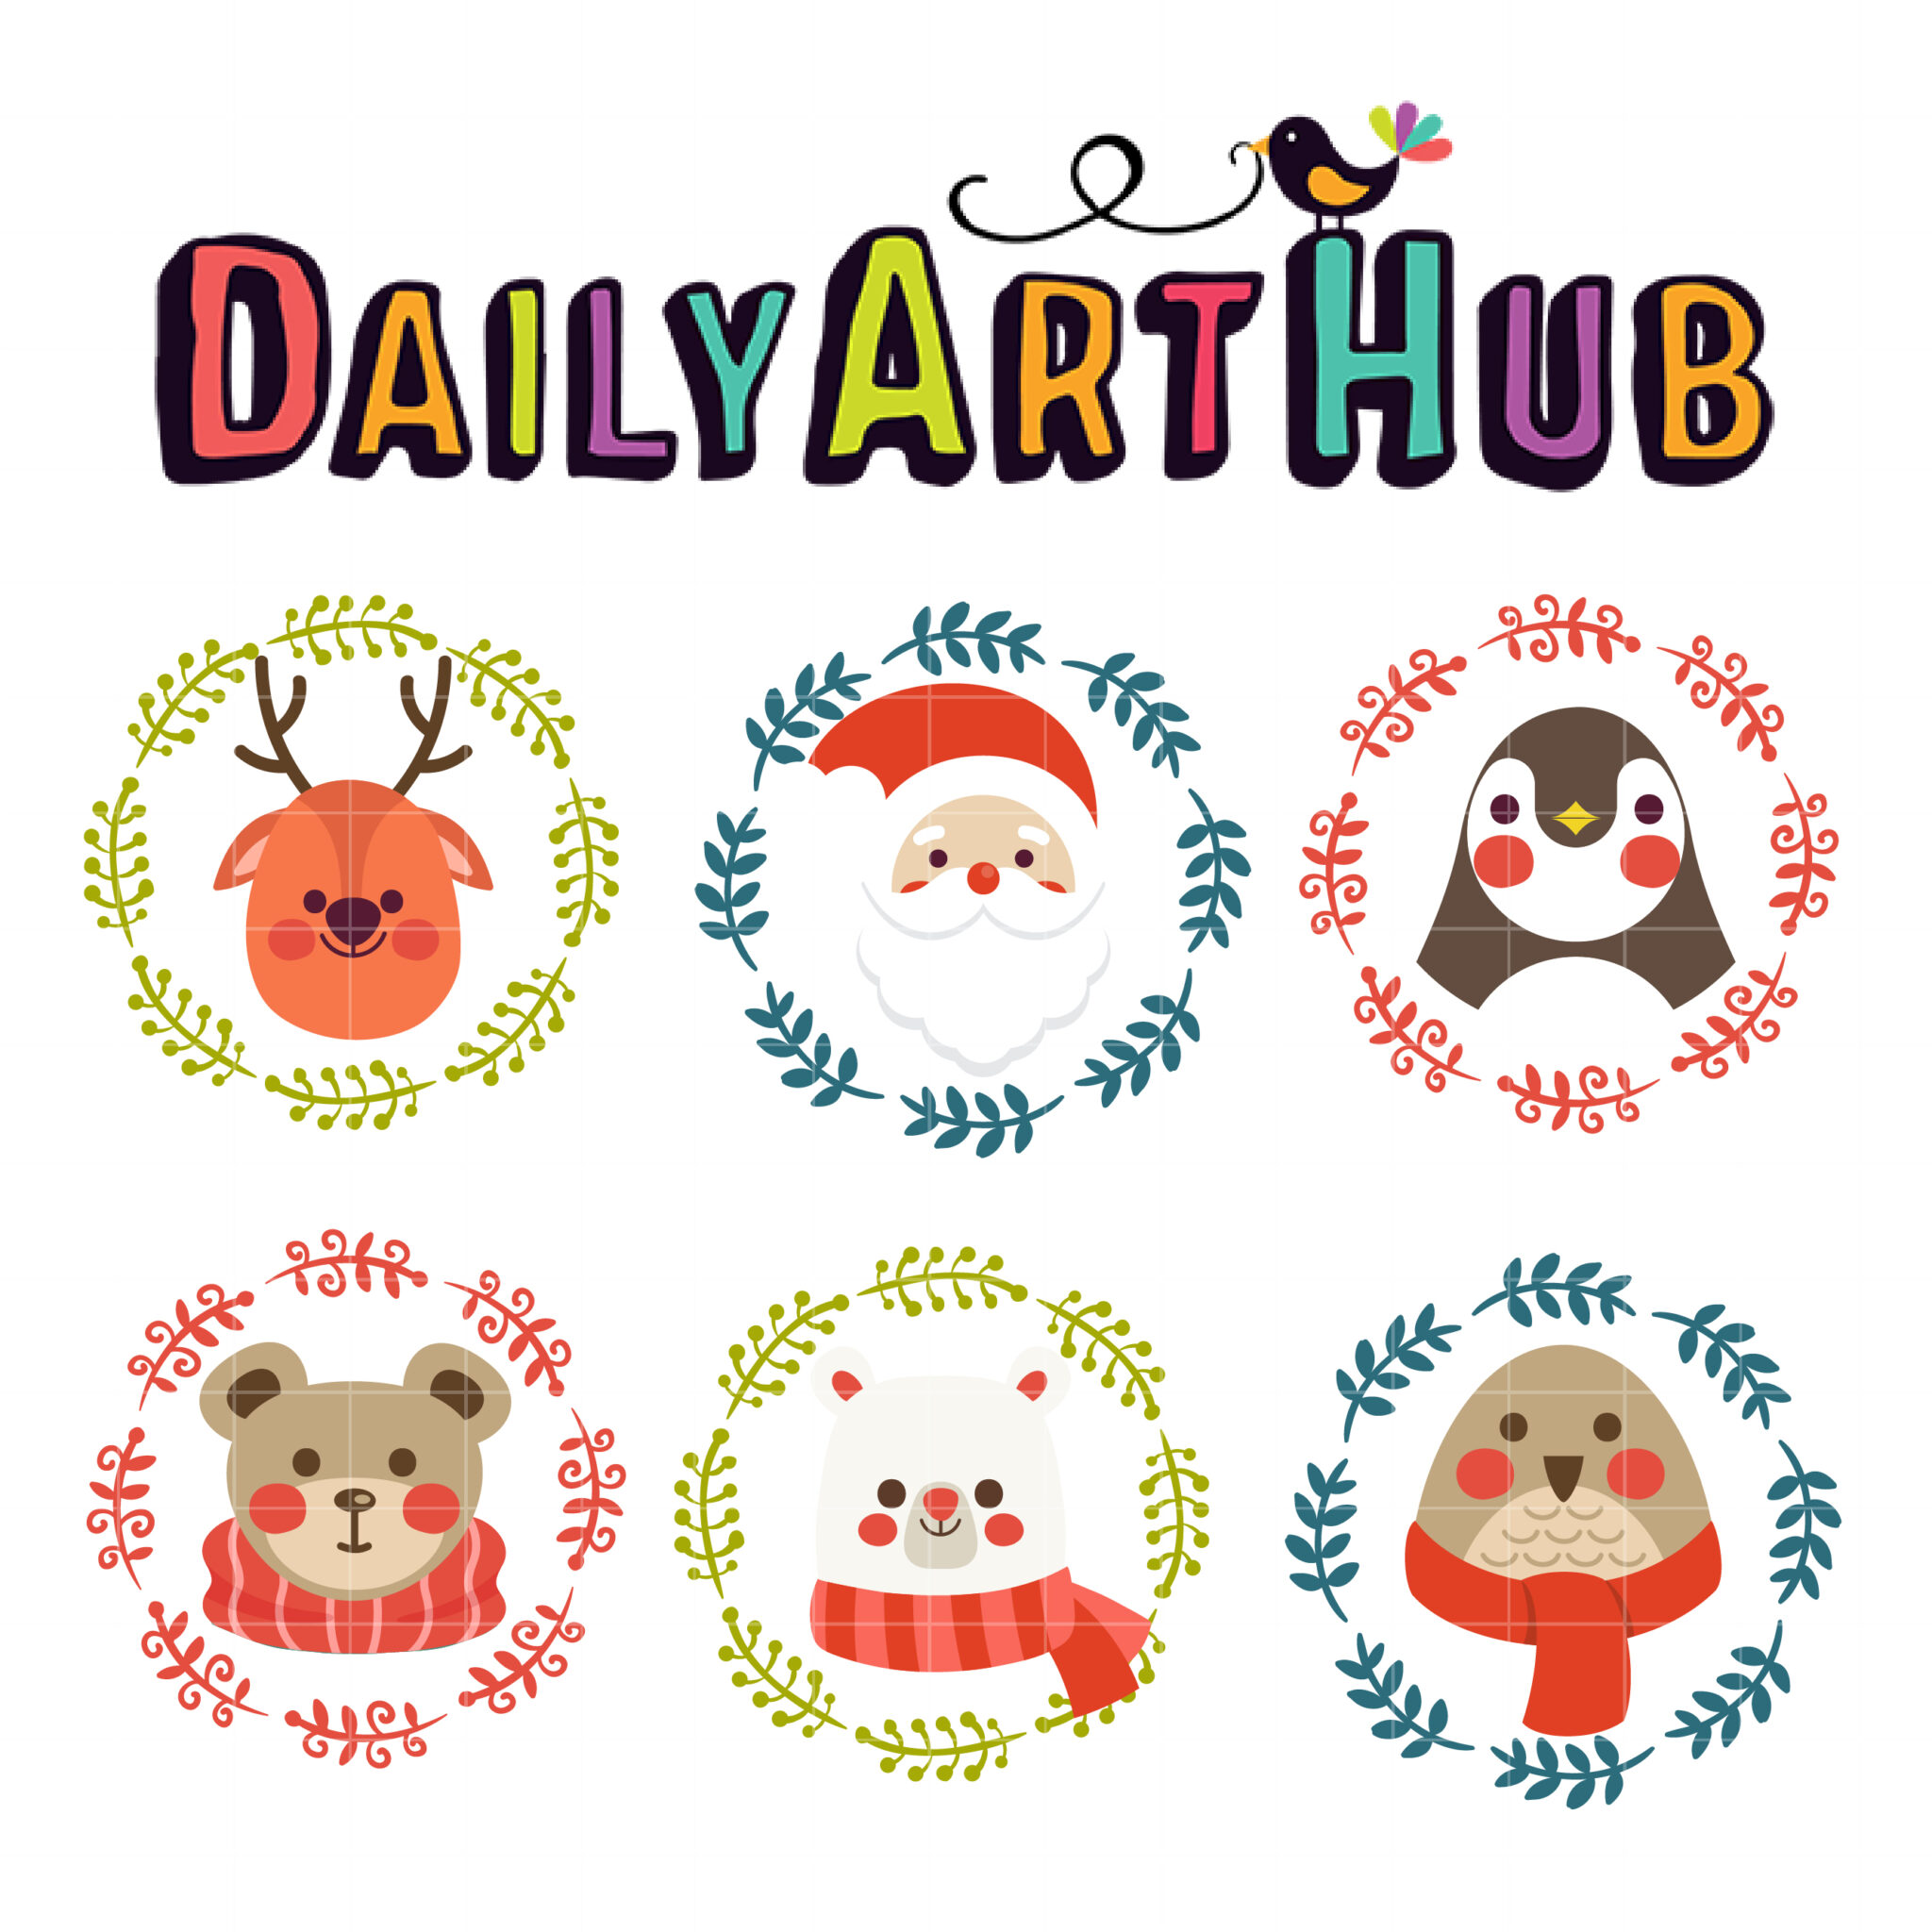 https://www.dailyarthub.com/wp-content/uploads/2021/11/Christmas-Character-Badge-scaled.jpg